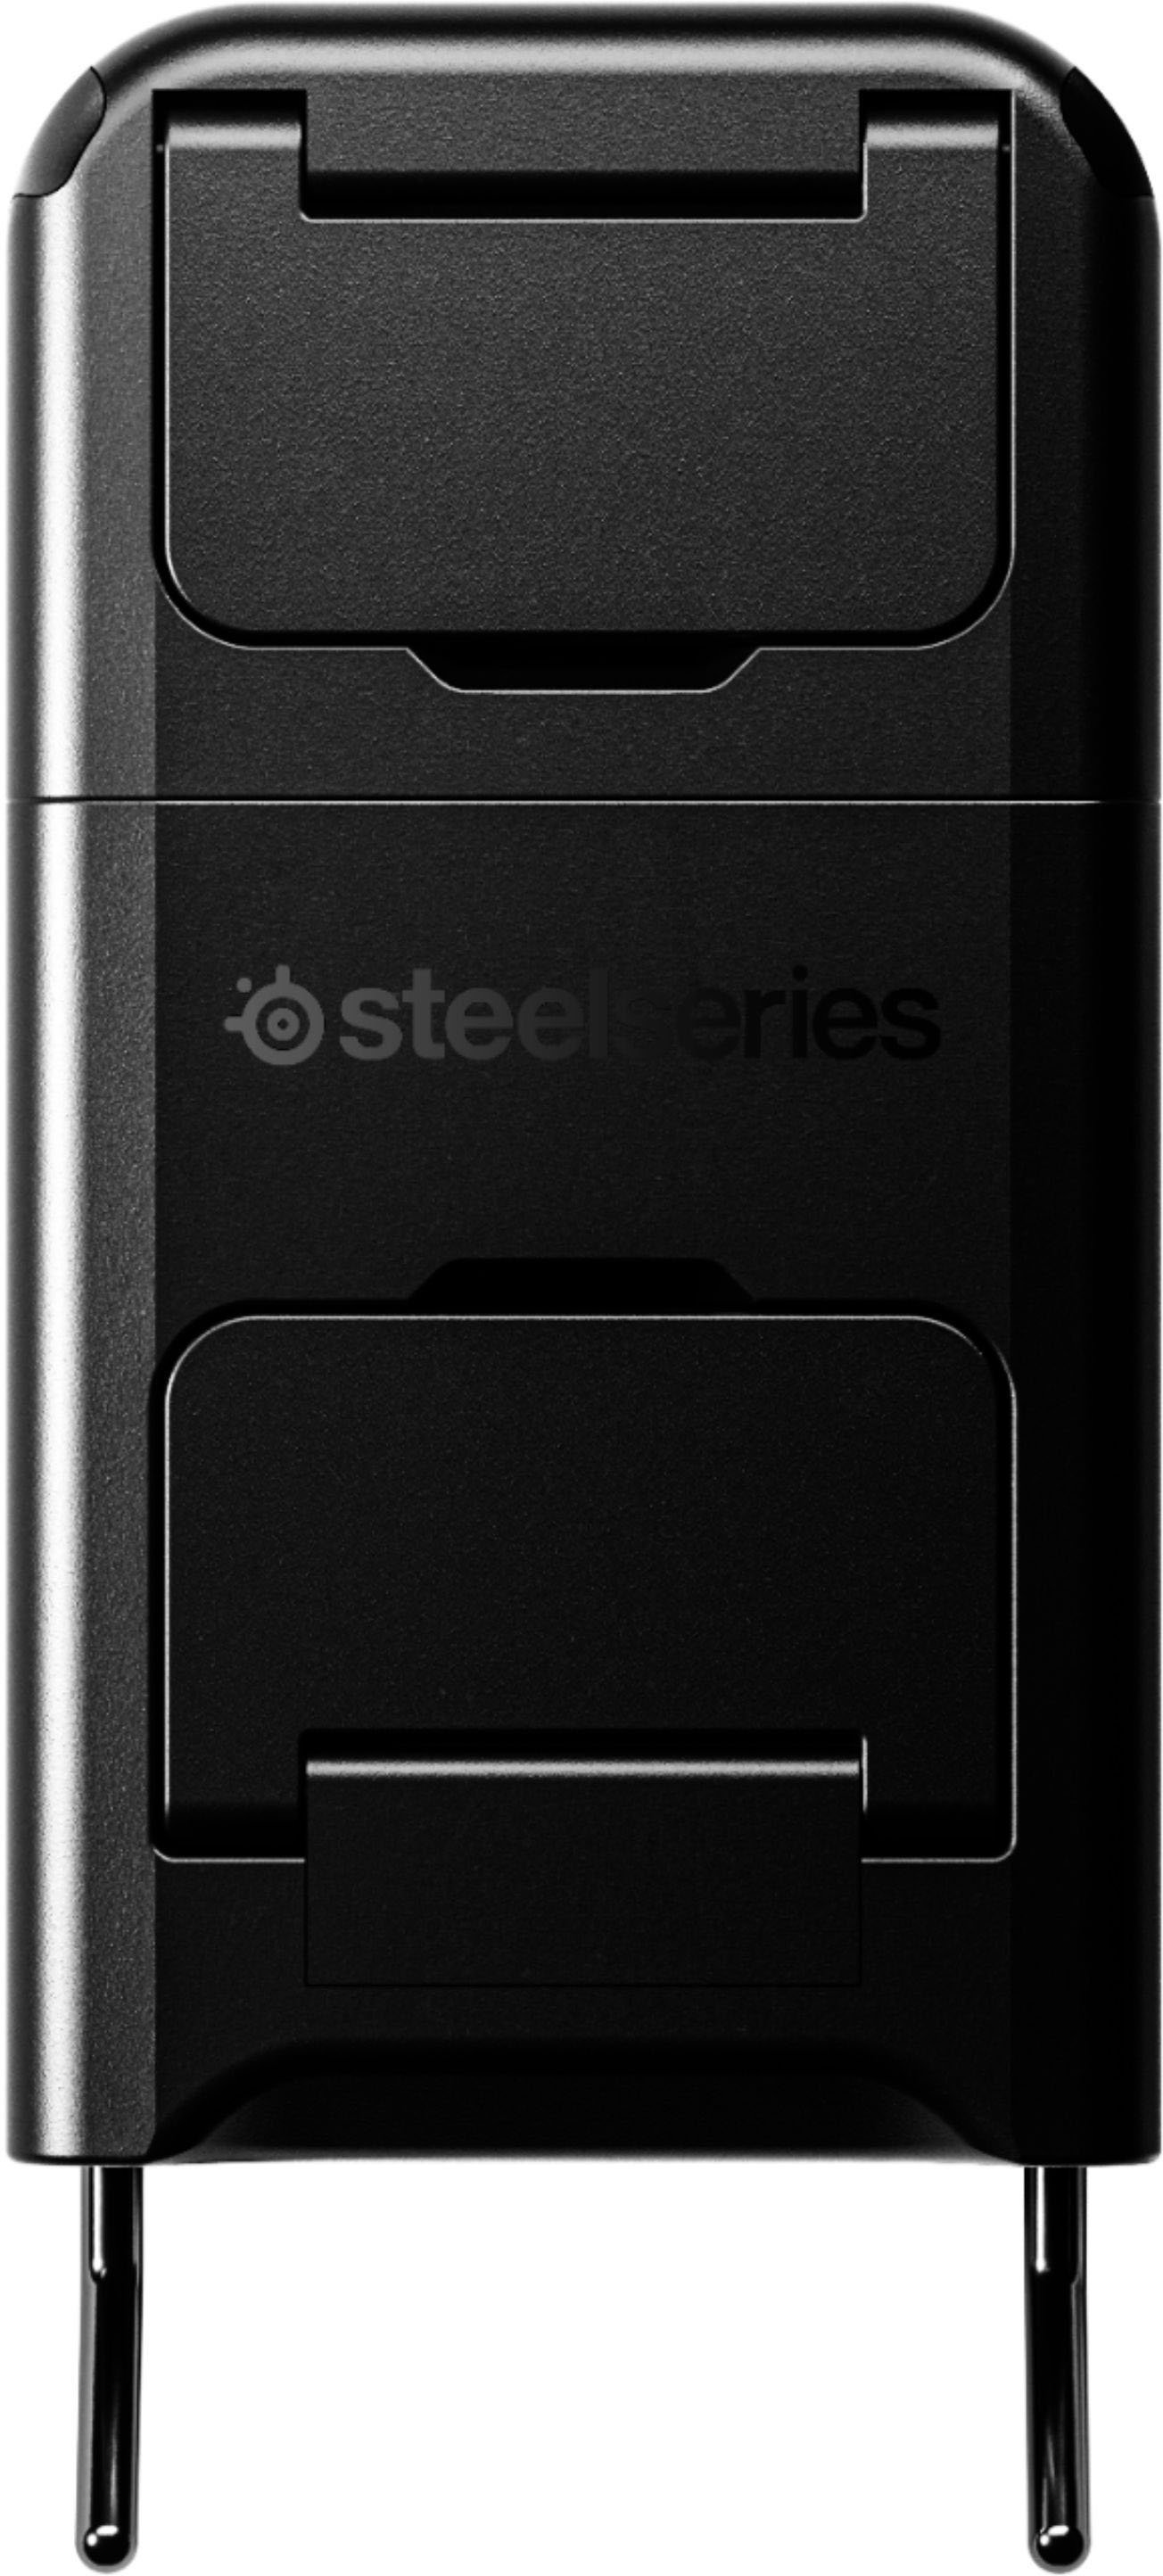 Back View: SteelSeries NIMBUS+ Wireless Gaming Controller, Black, Black